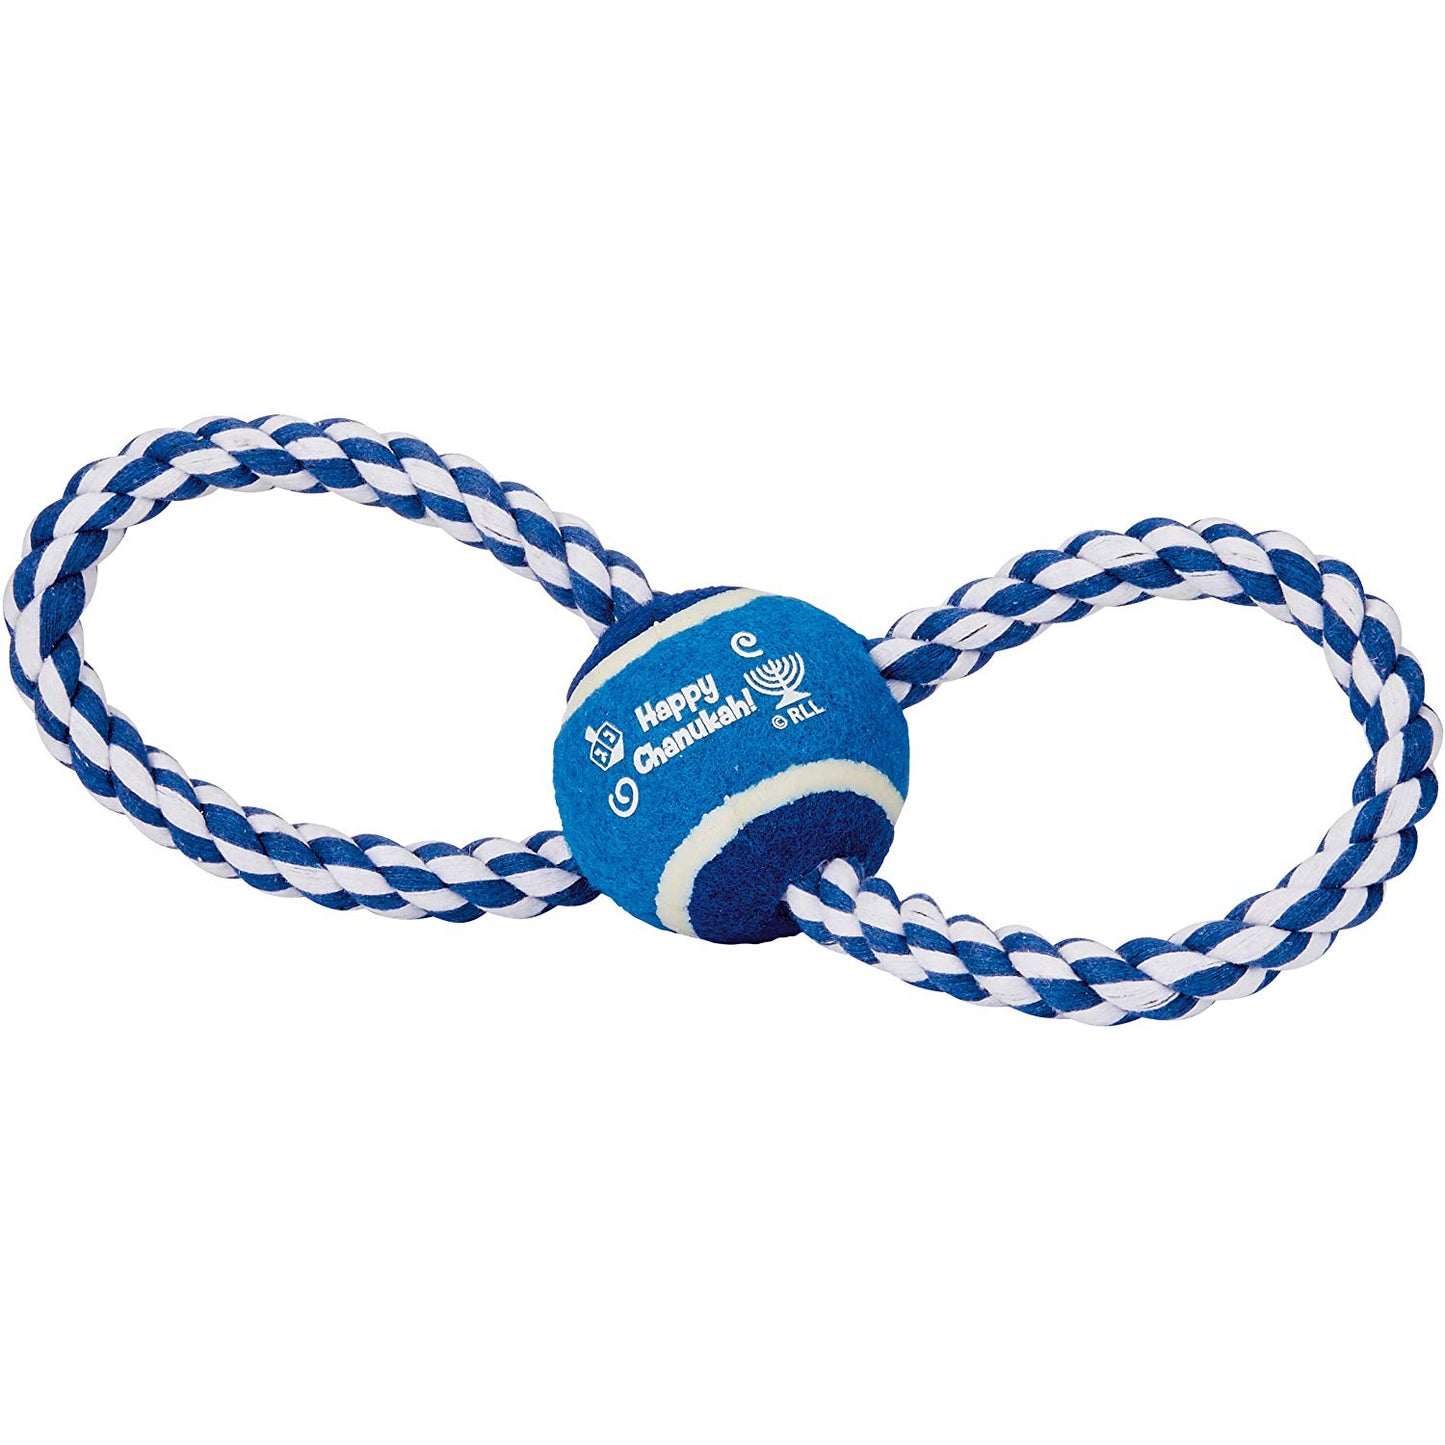 Rite Lite Chanukah Rope Chewdaica Dog Toy, Blue/White